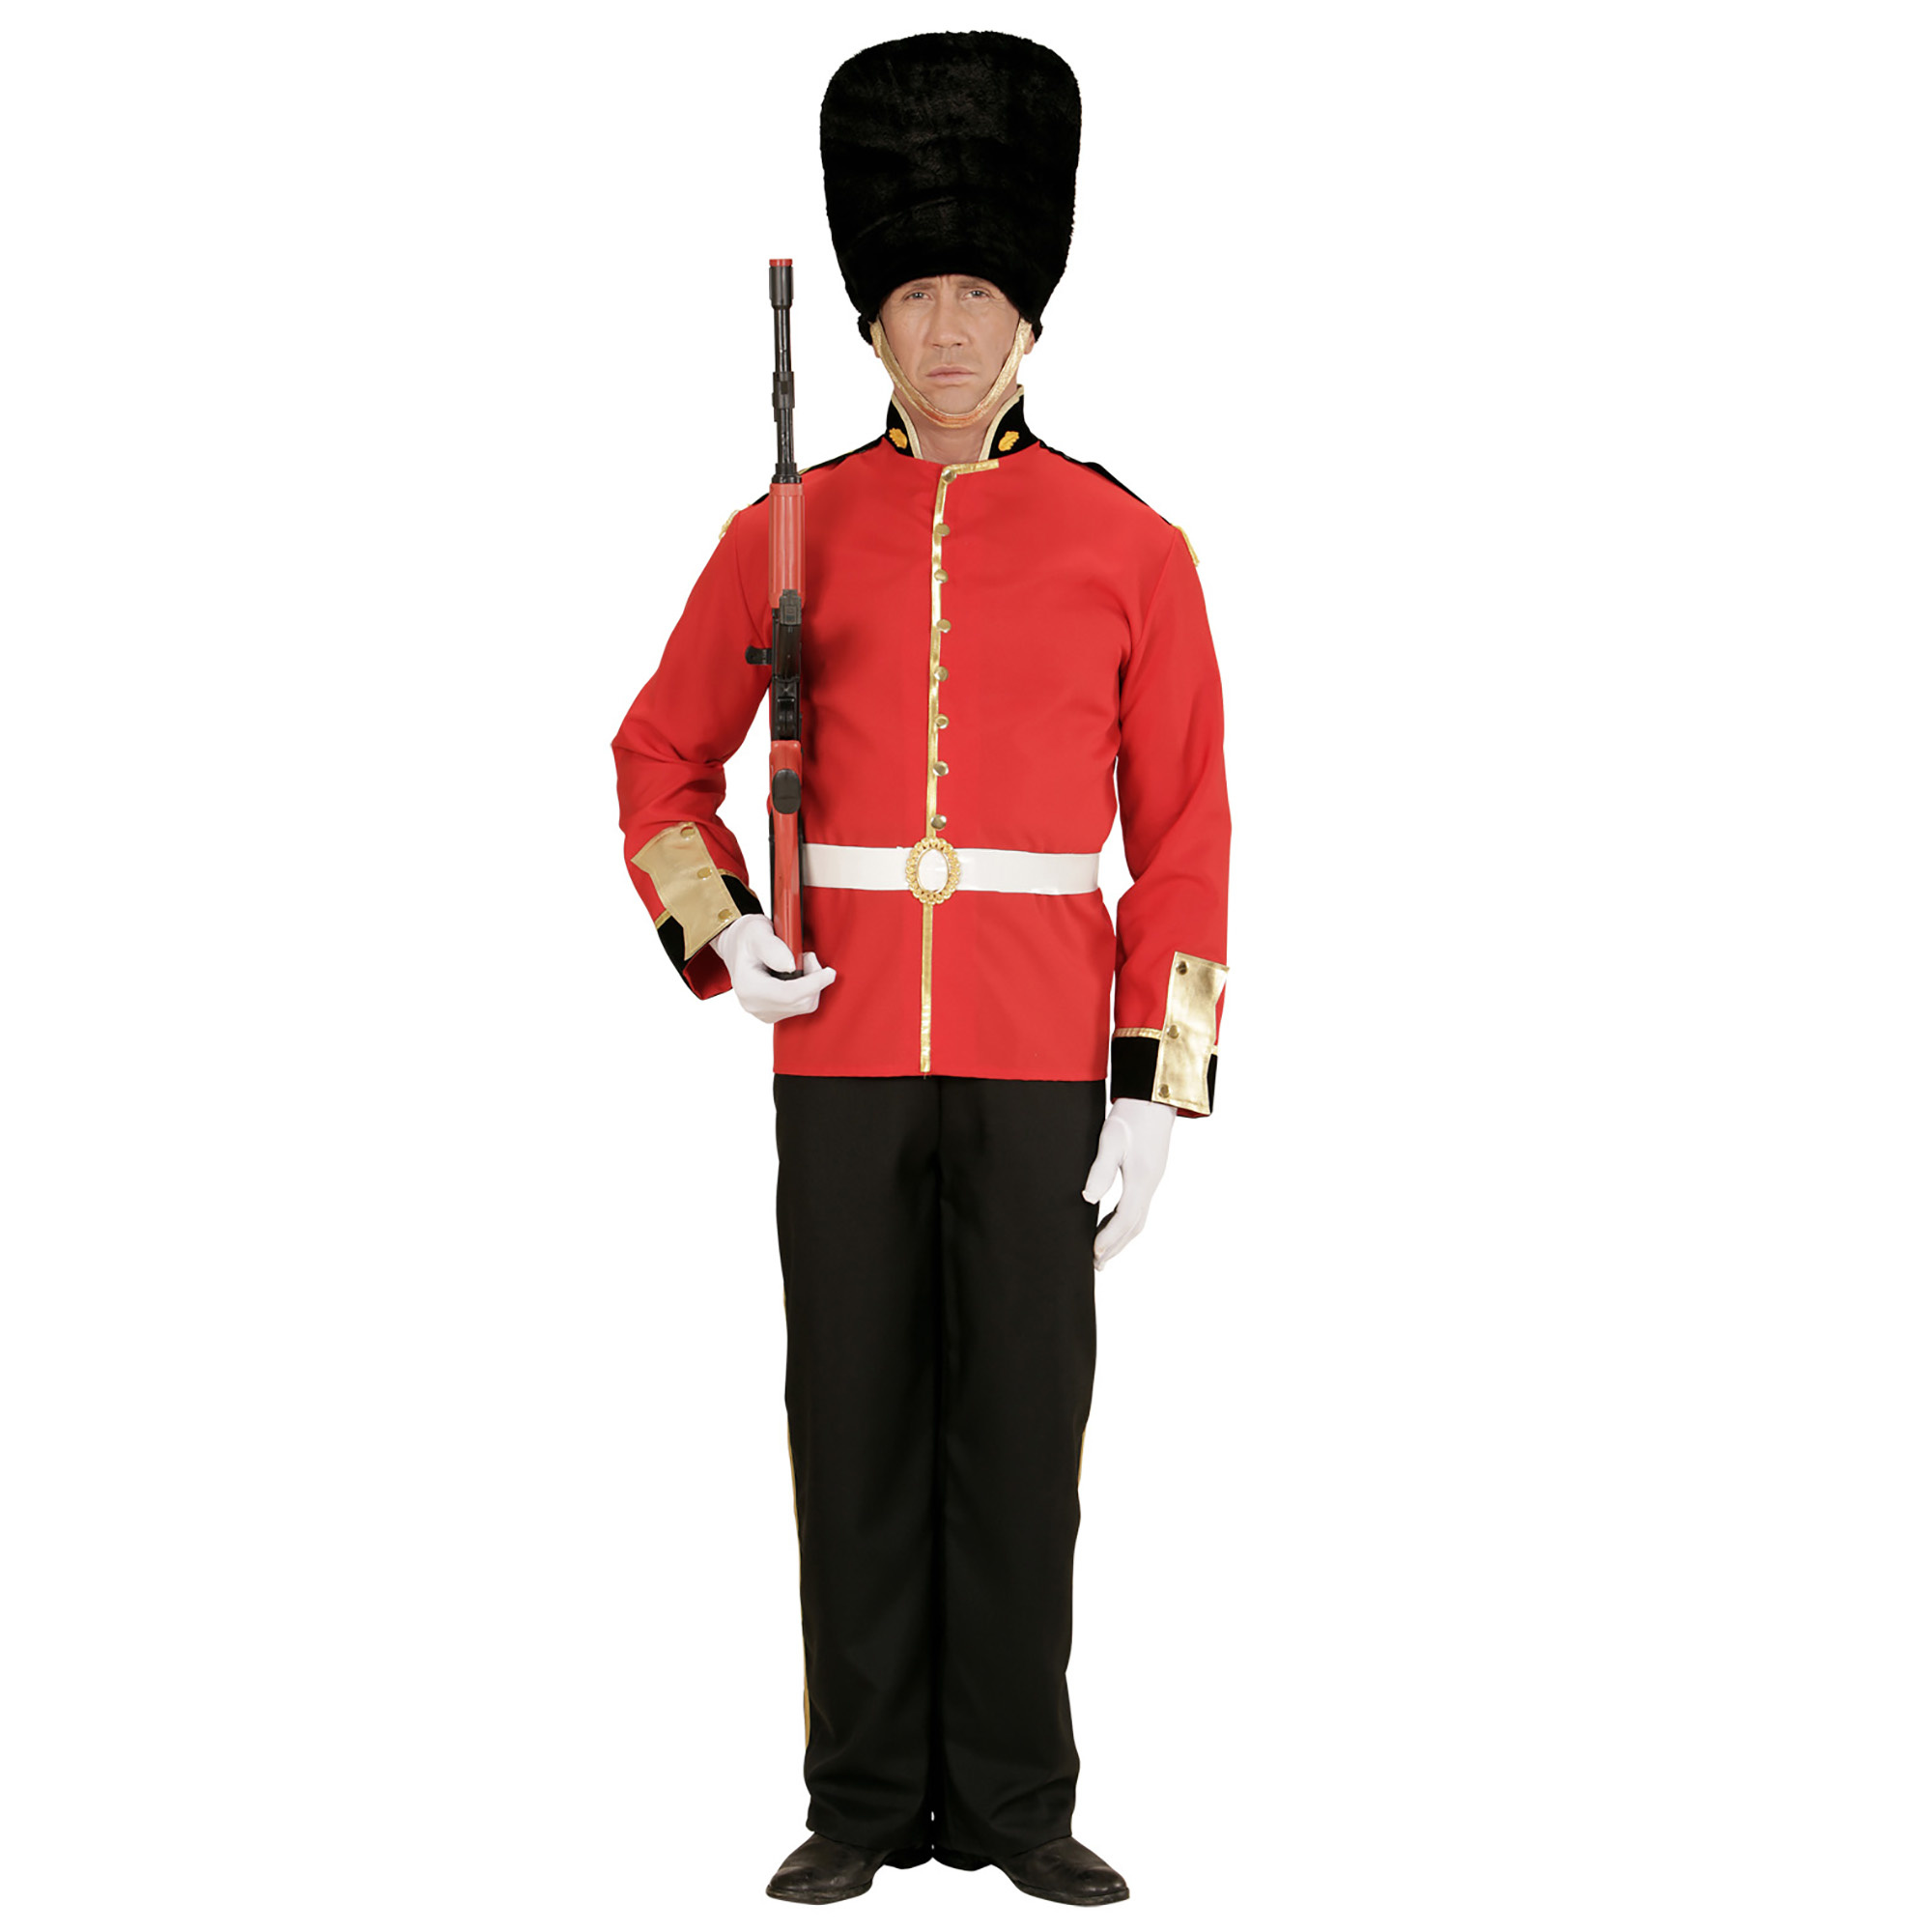 Widmann - Politie & Detective Kostuum - Beefeater Royal Guard - Man - rood - Medium - Carnavalskleding - Verkleedkleding